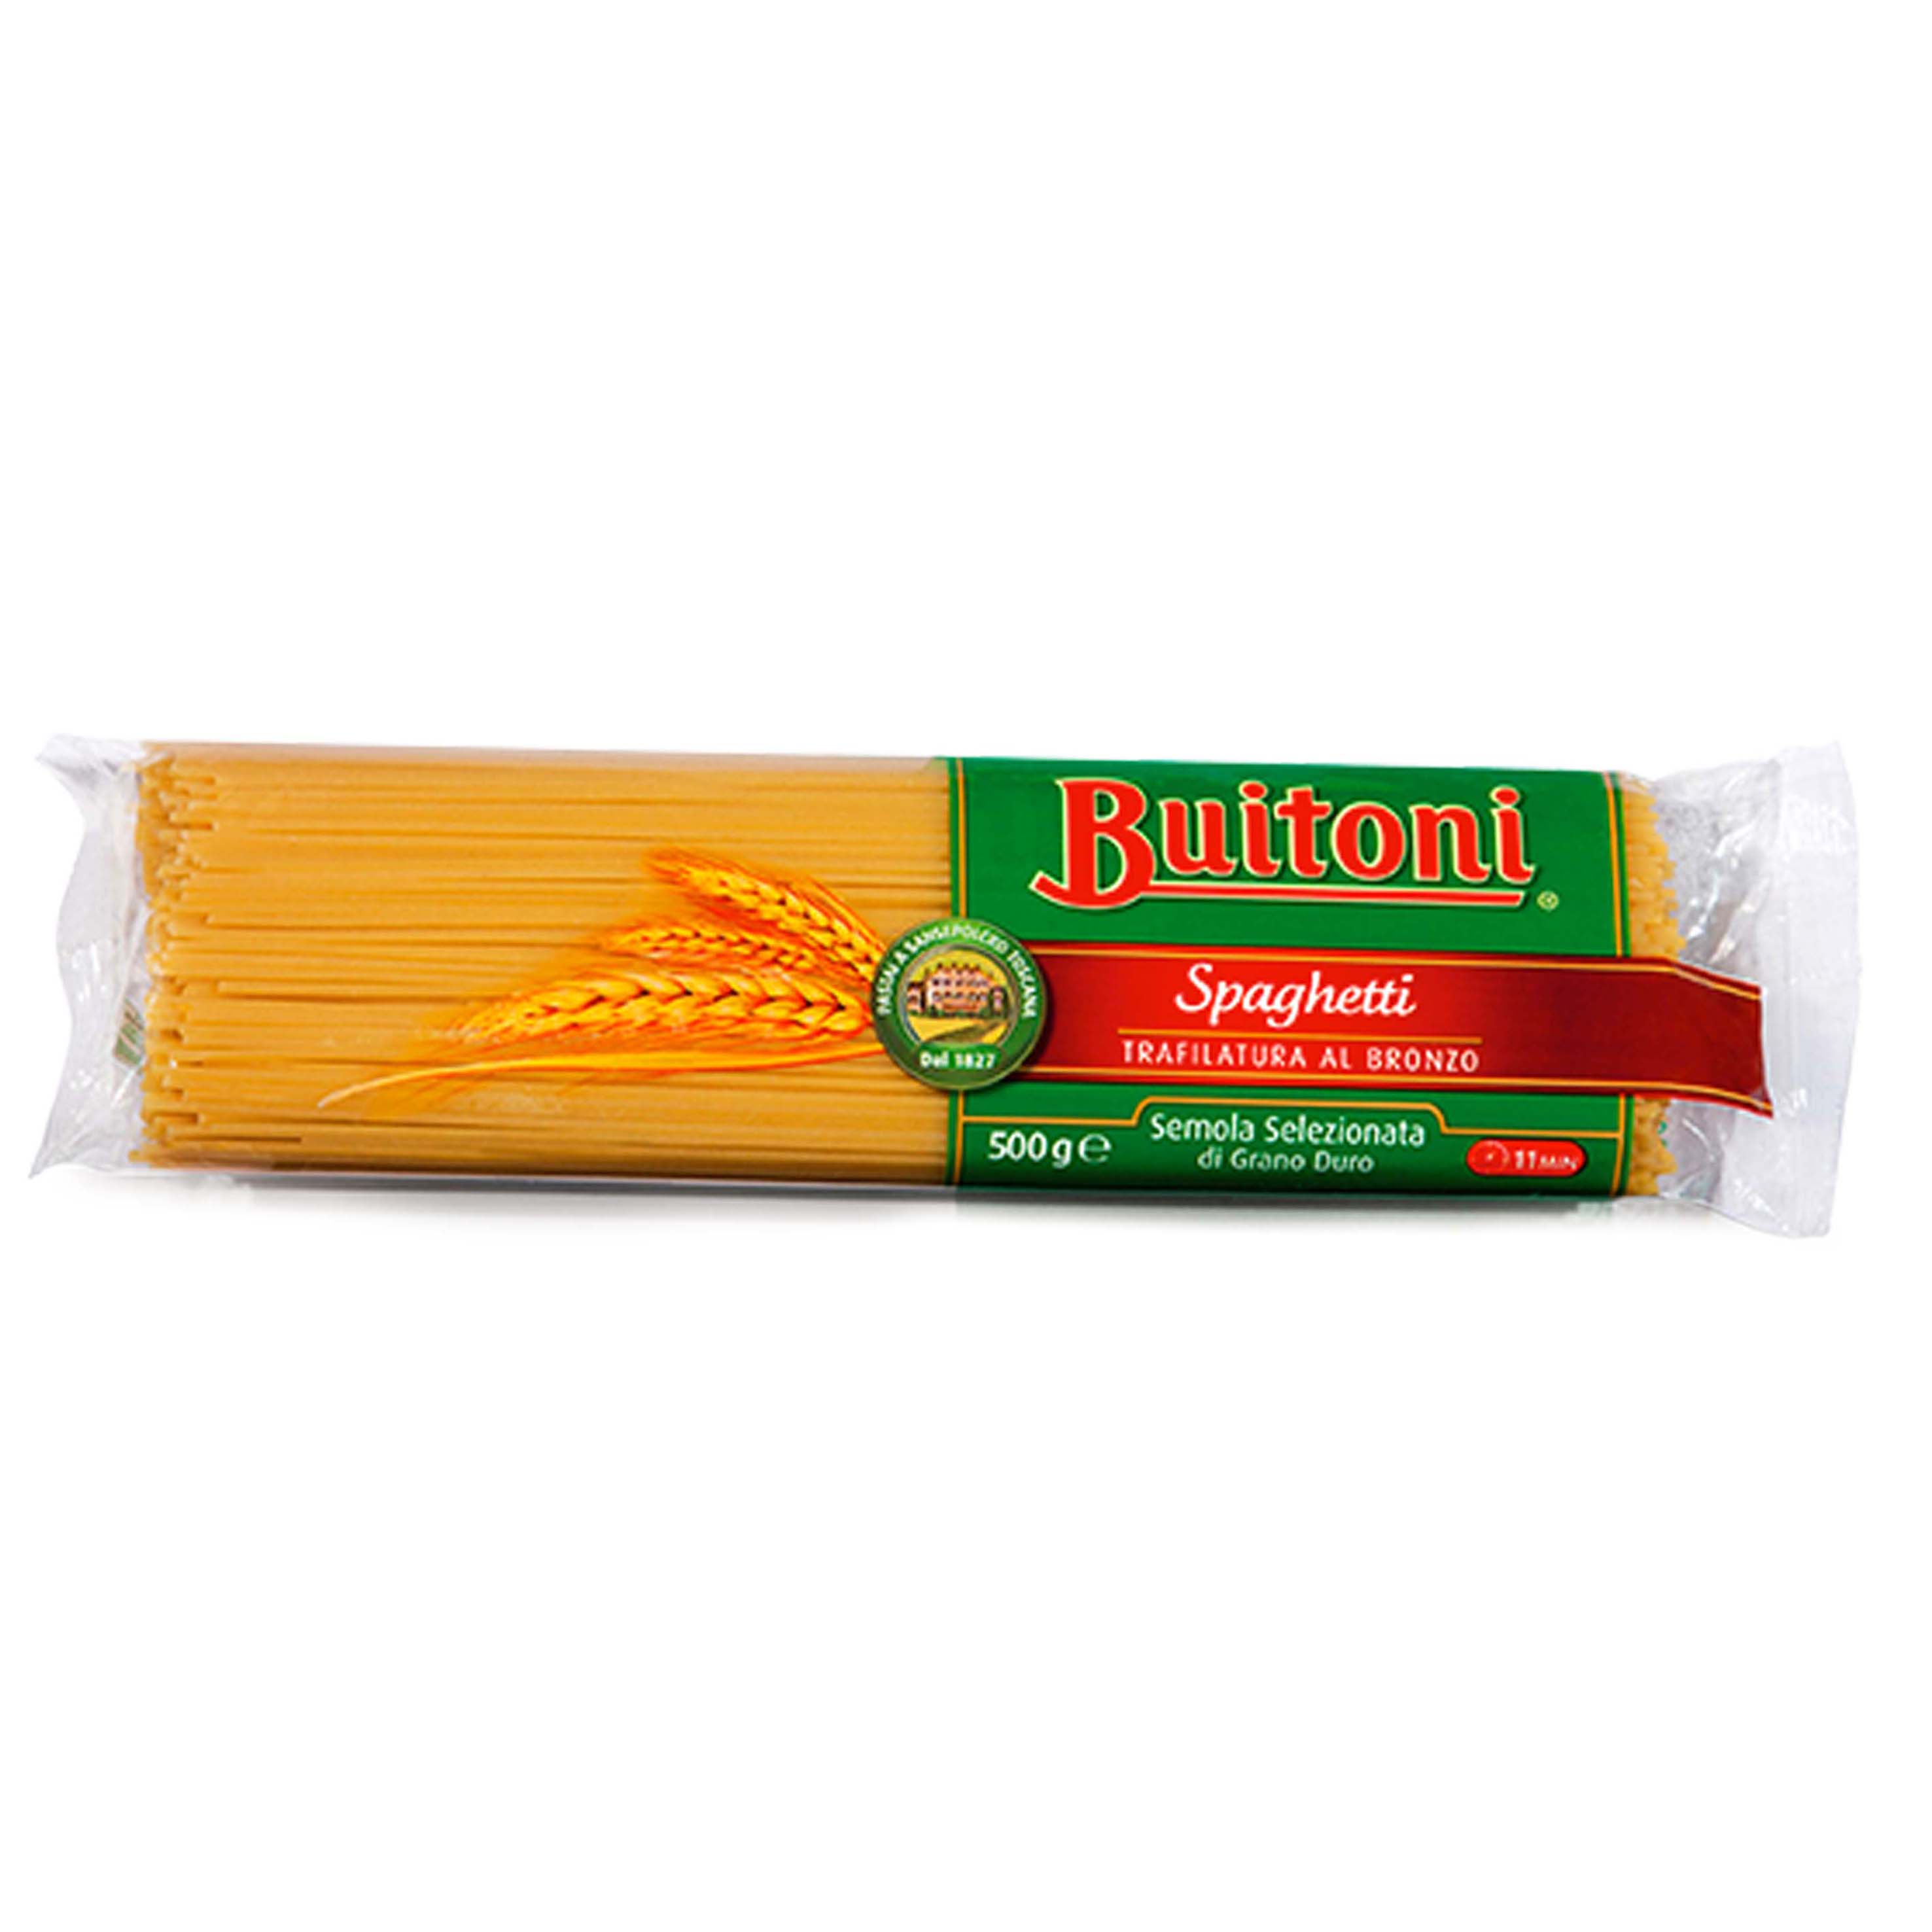 Buitoni spaghetti 72 500gr